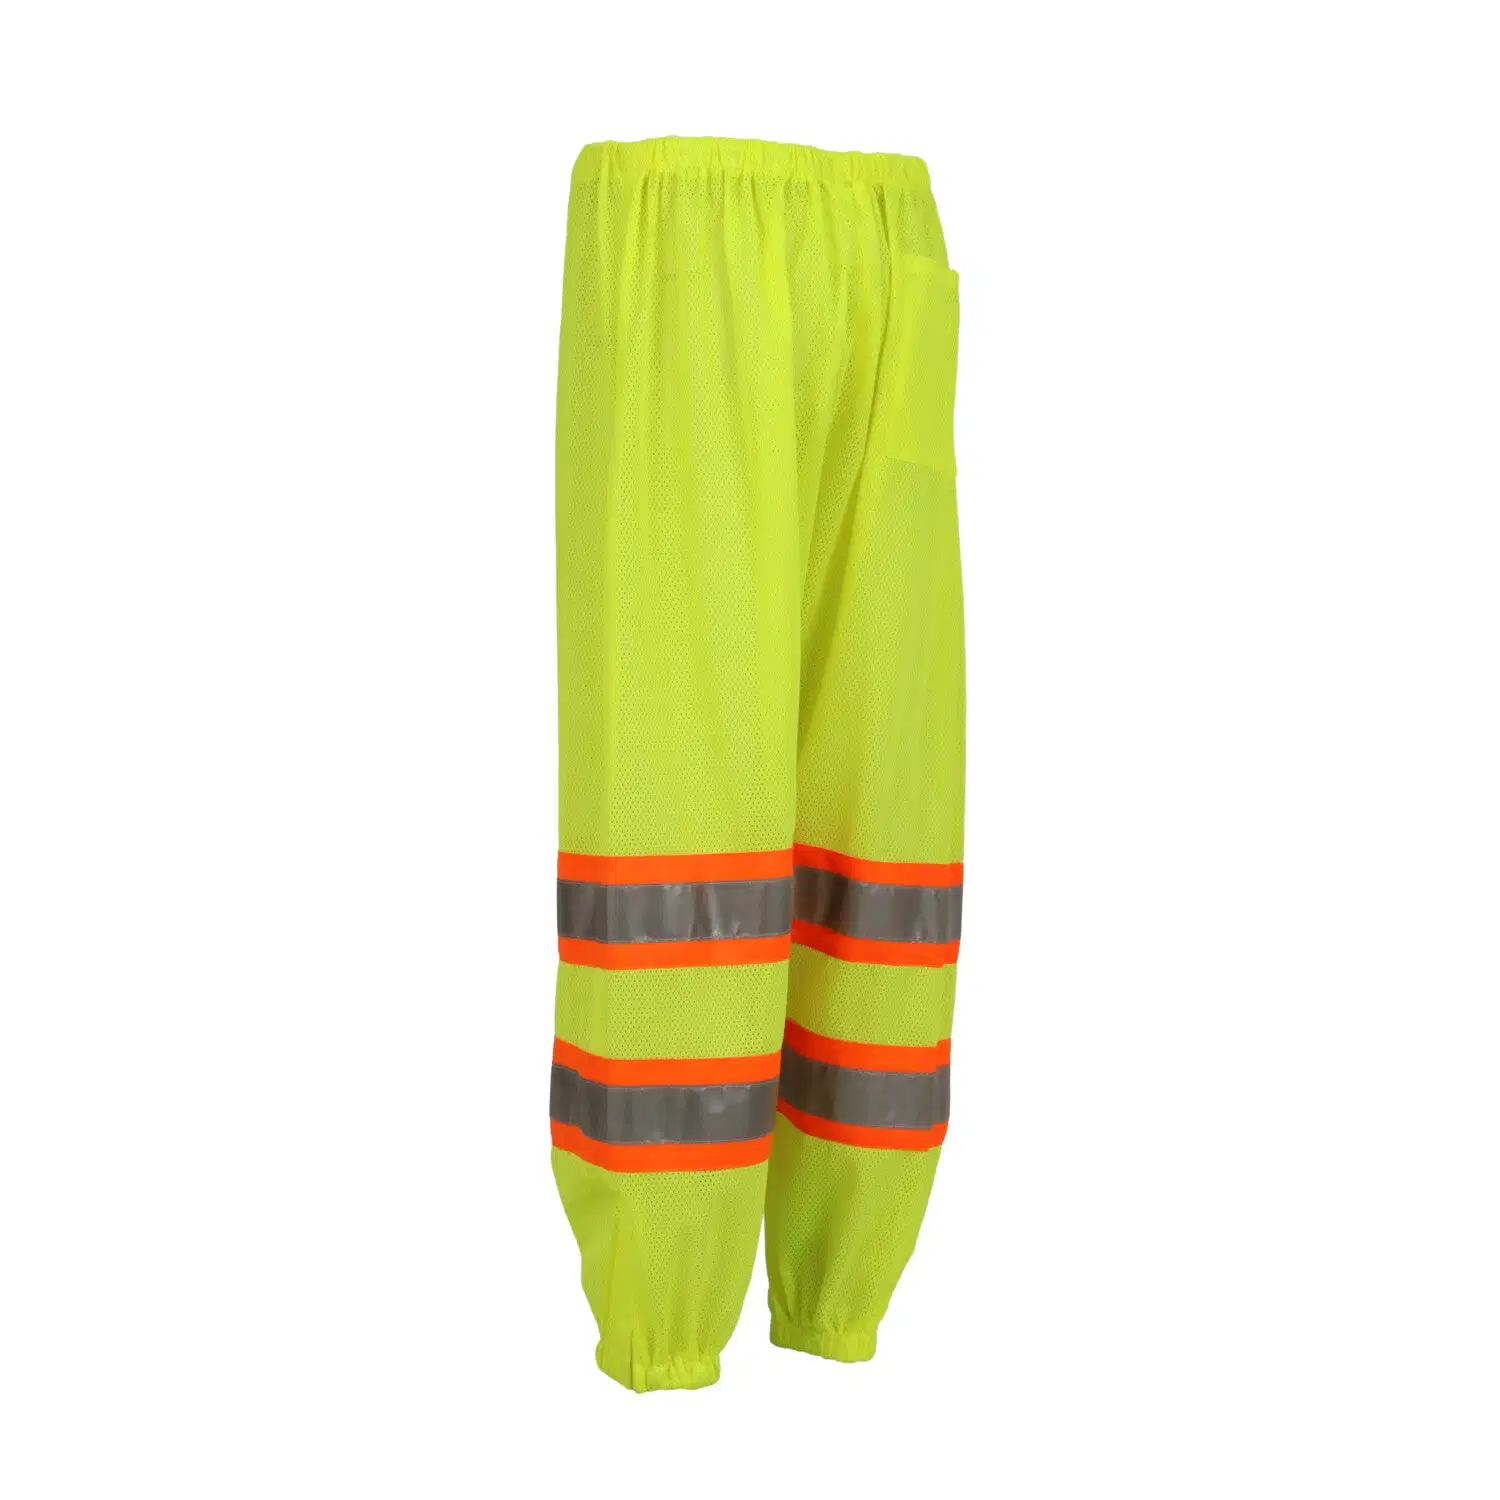 Safety Pants Reflective Rain Clothing Pants Men Work Wear Pants